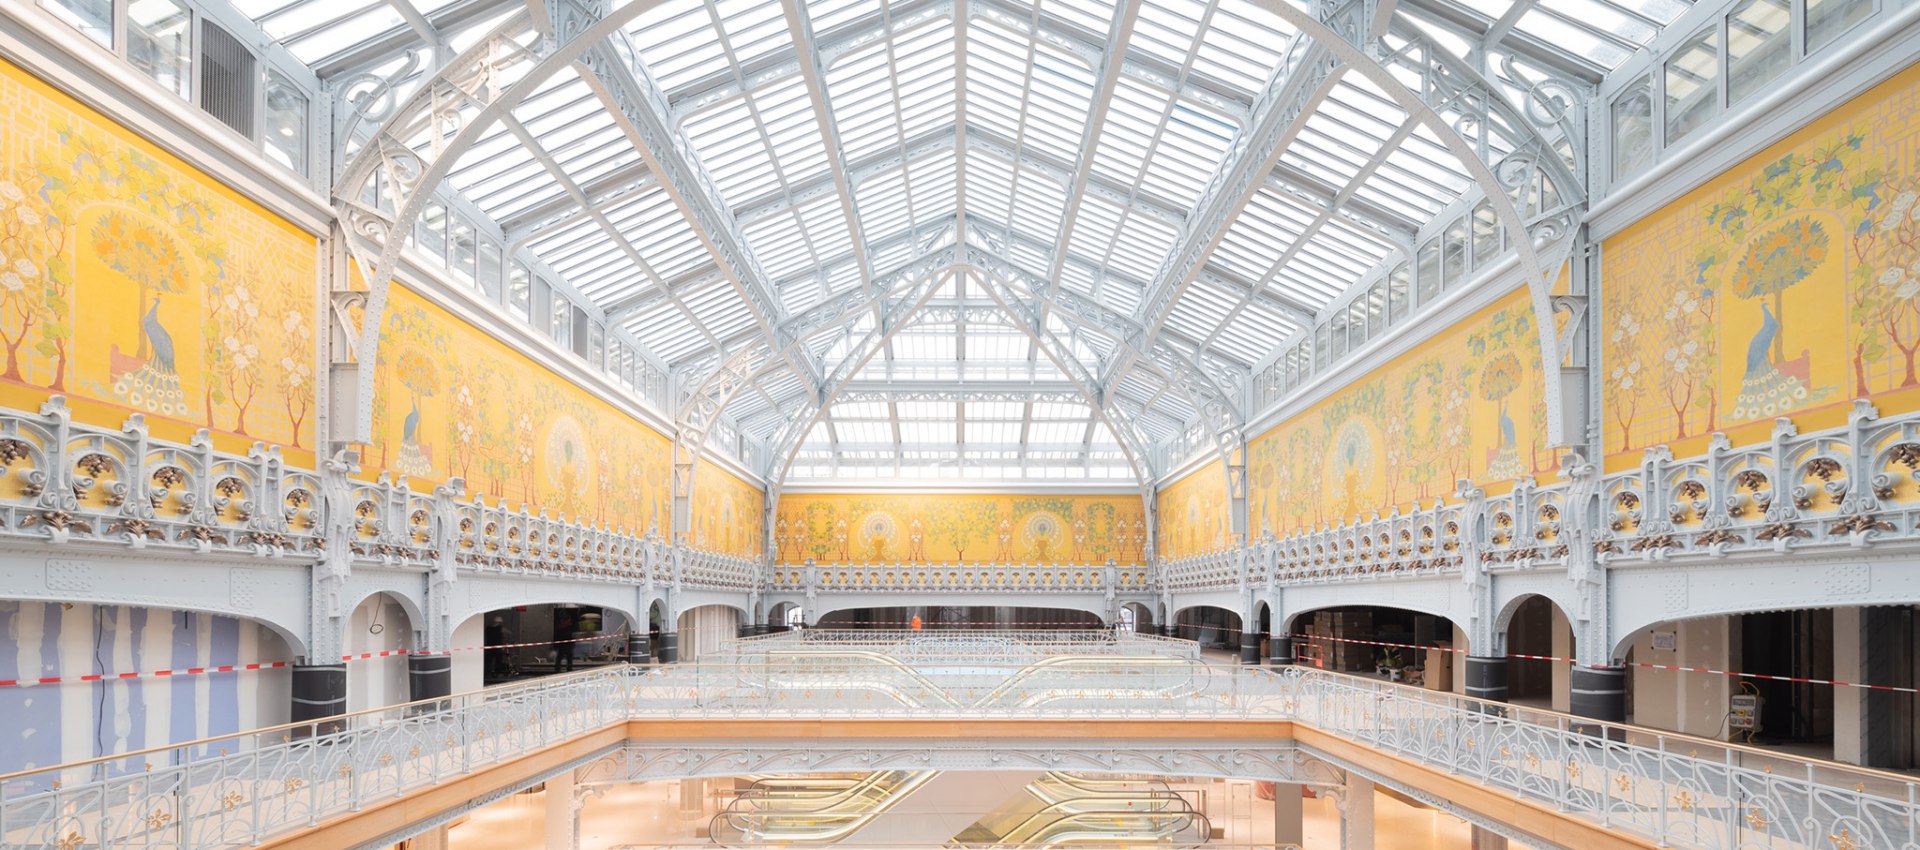 Legendary Paris department store La Samaritaine reopens